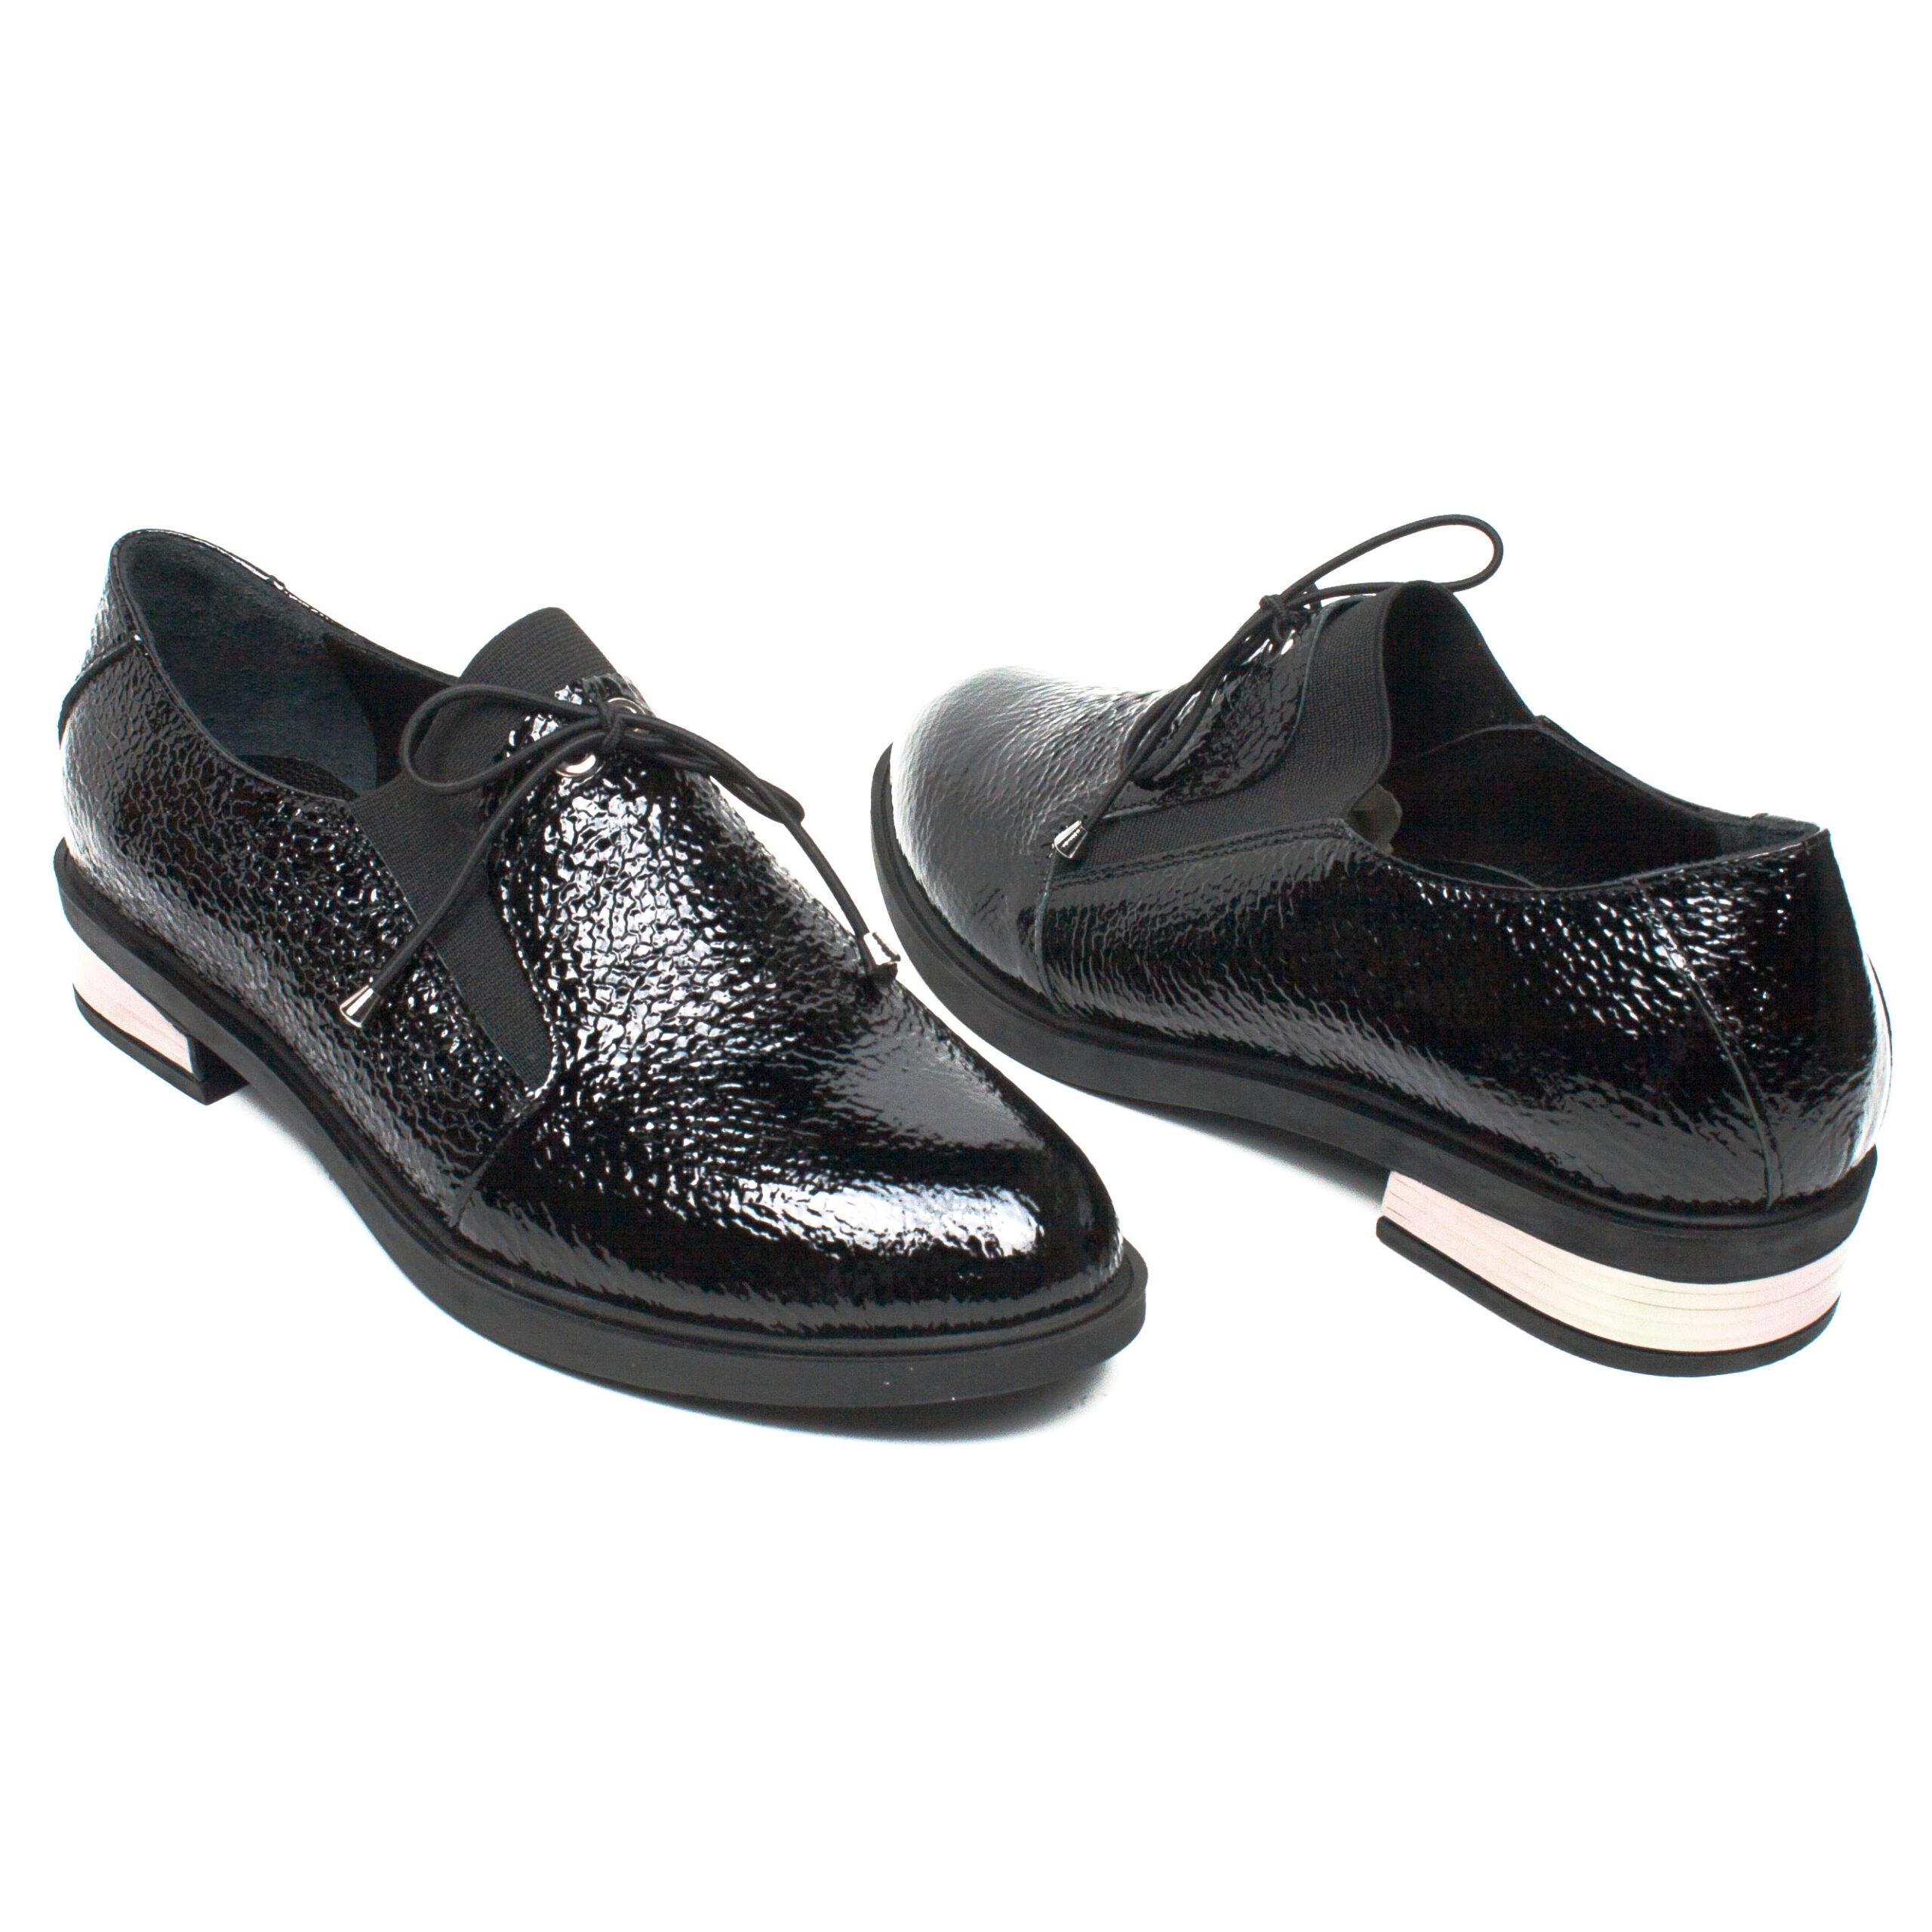 Manos pantofi dama negru ID1775-NG